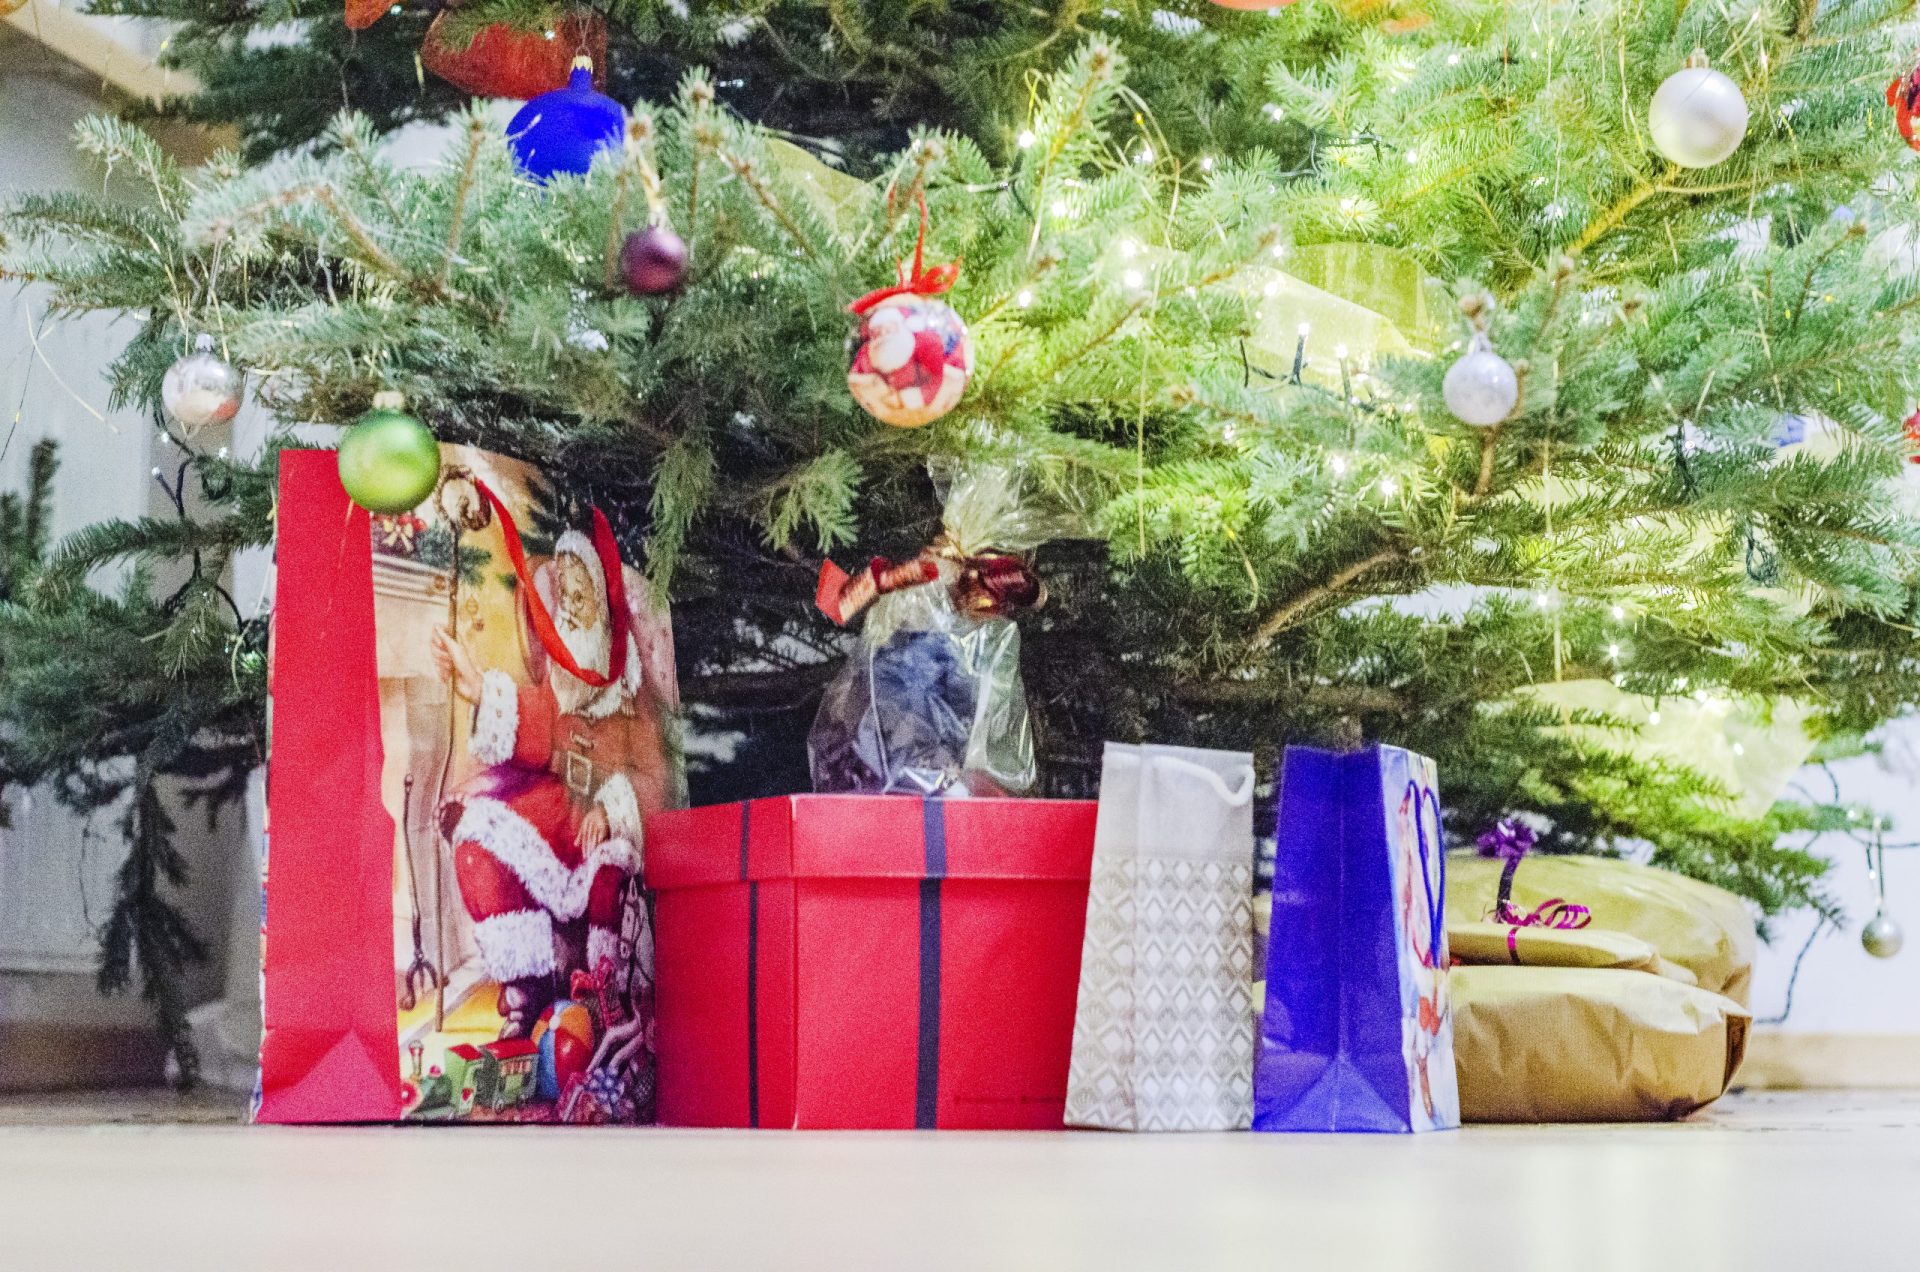 Corrida aos presentes. “All I want for Christmas is you”… e algo debaixo da árvore de Natal